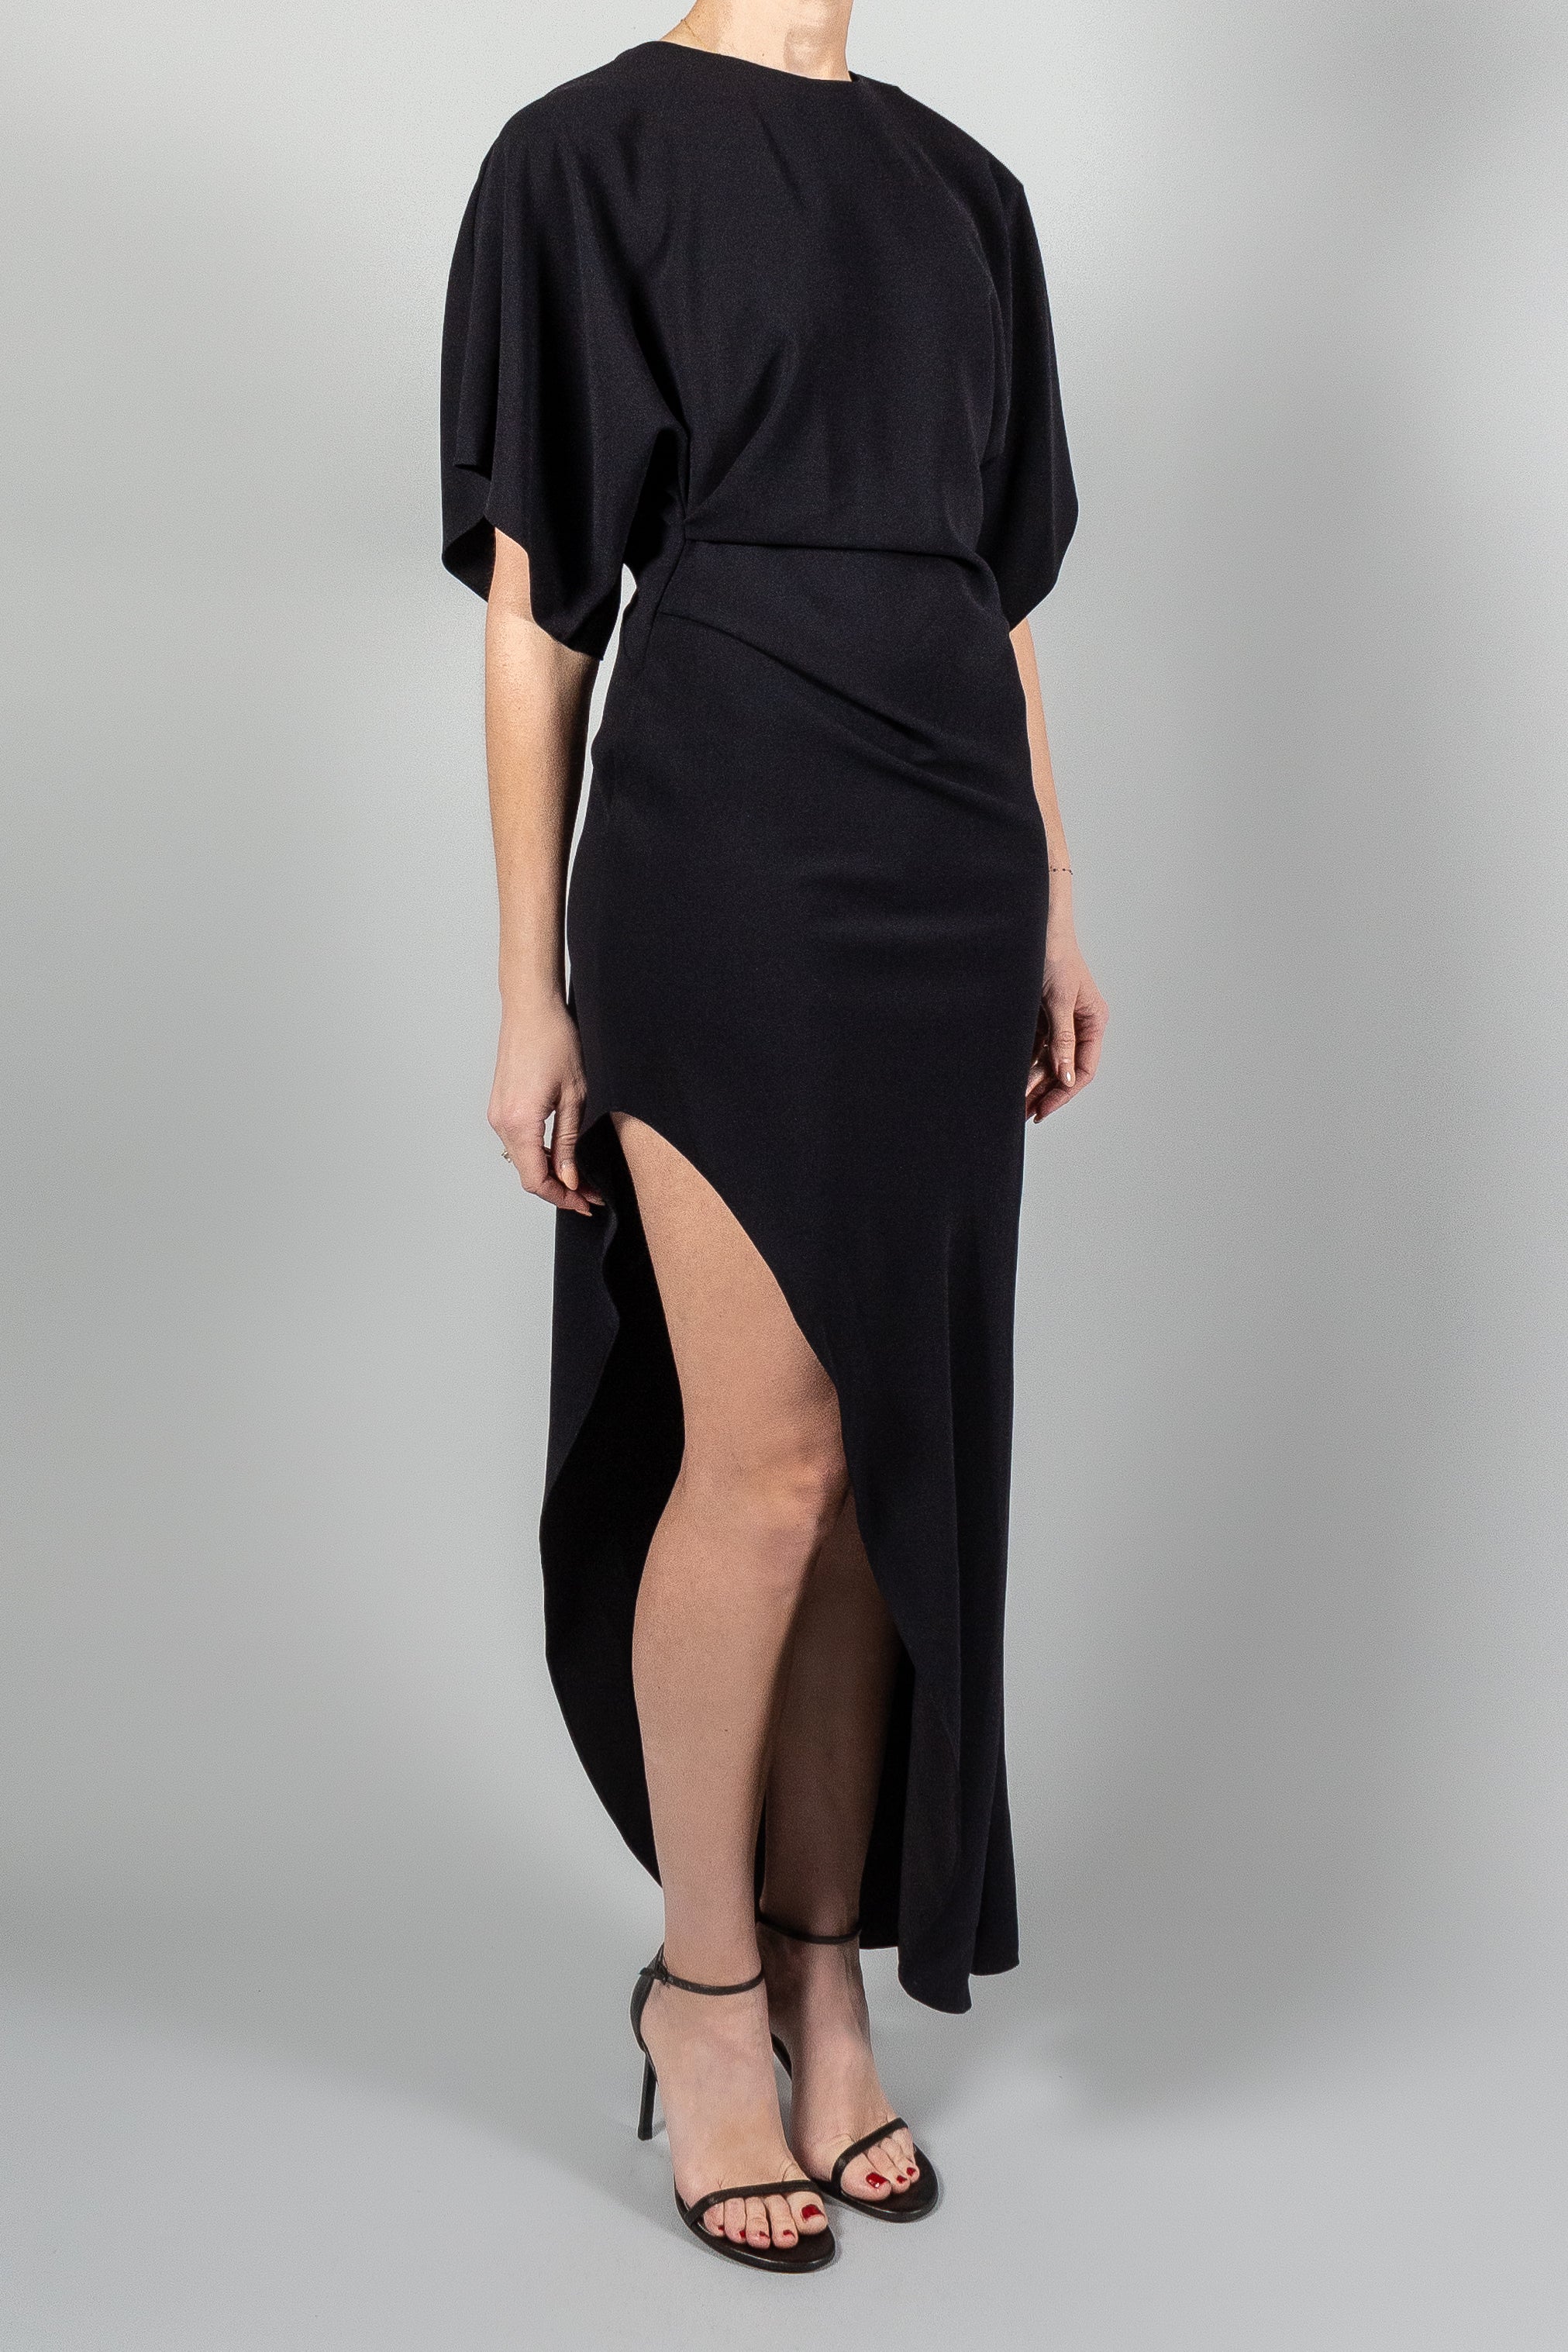 Rev The Savita Asymmetric Long Dress-Dresses and Jumpsuits-Misch-Boutique-Vancouver-Canada-misch.ca